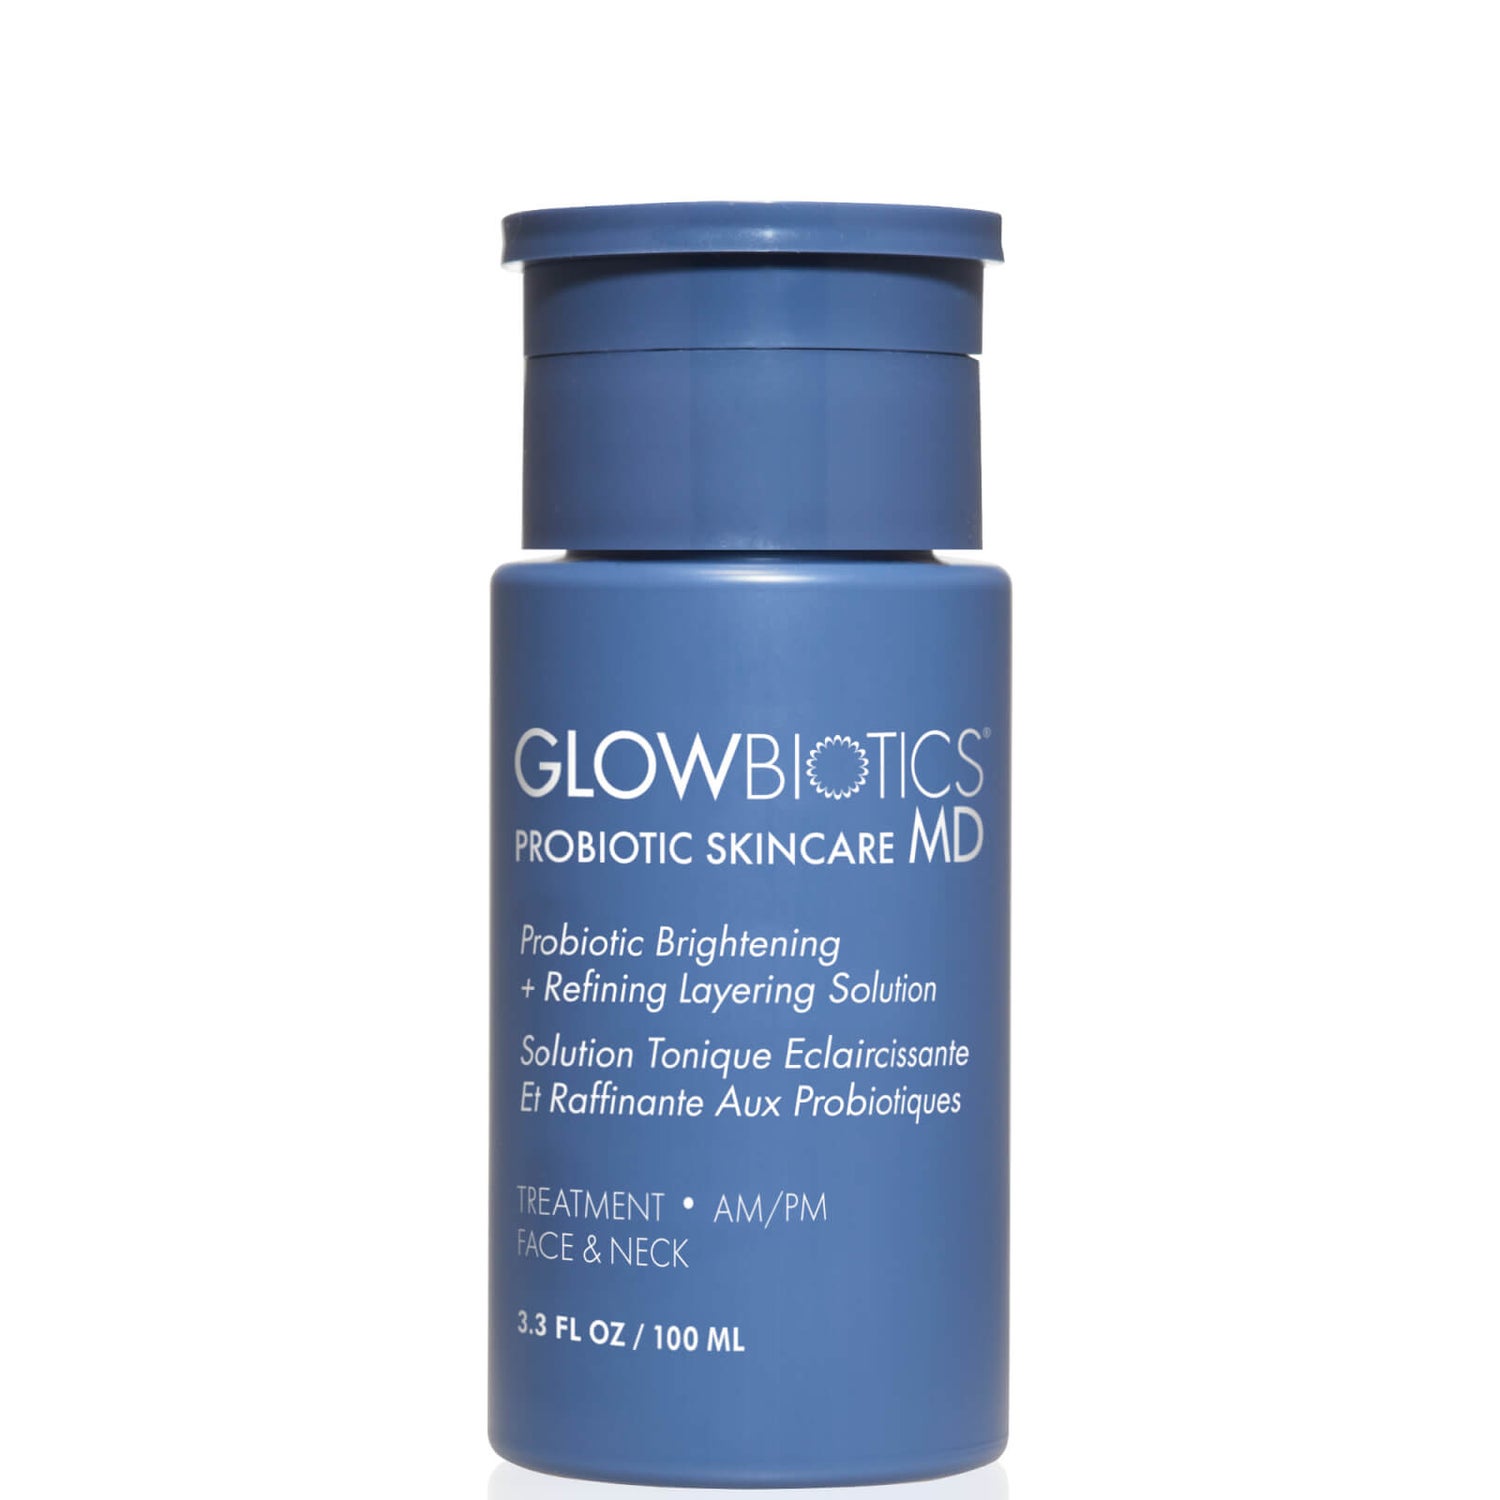 Glowbiotics MD Probiotic Brightening + Refining Layering Solution 5.5oz